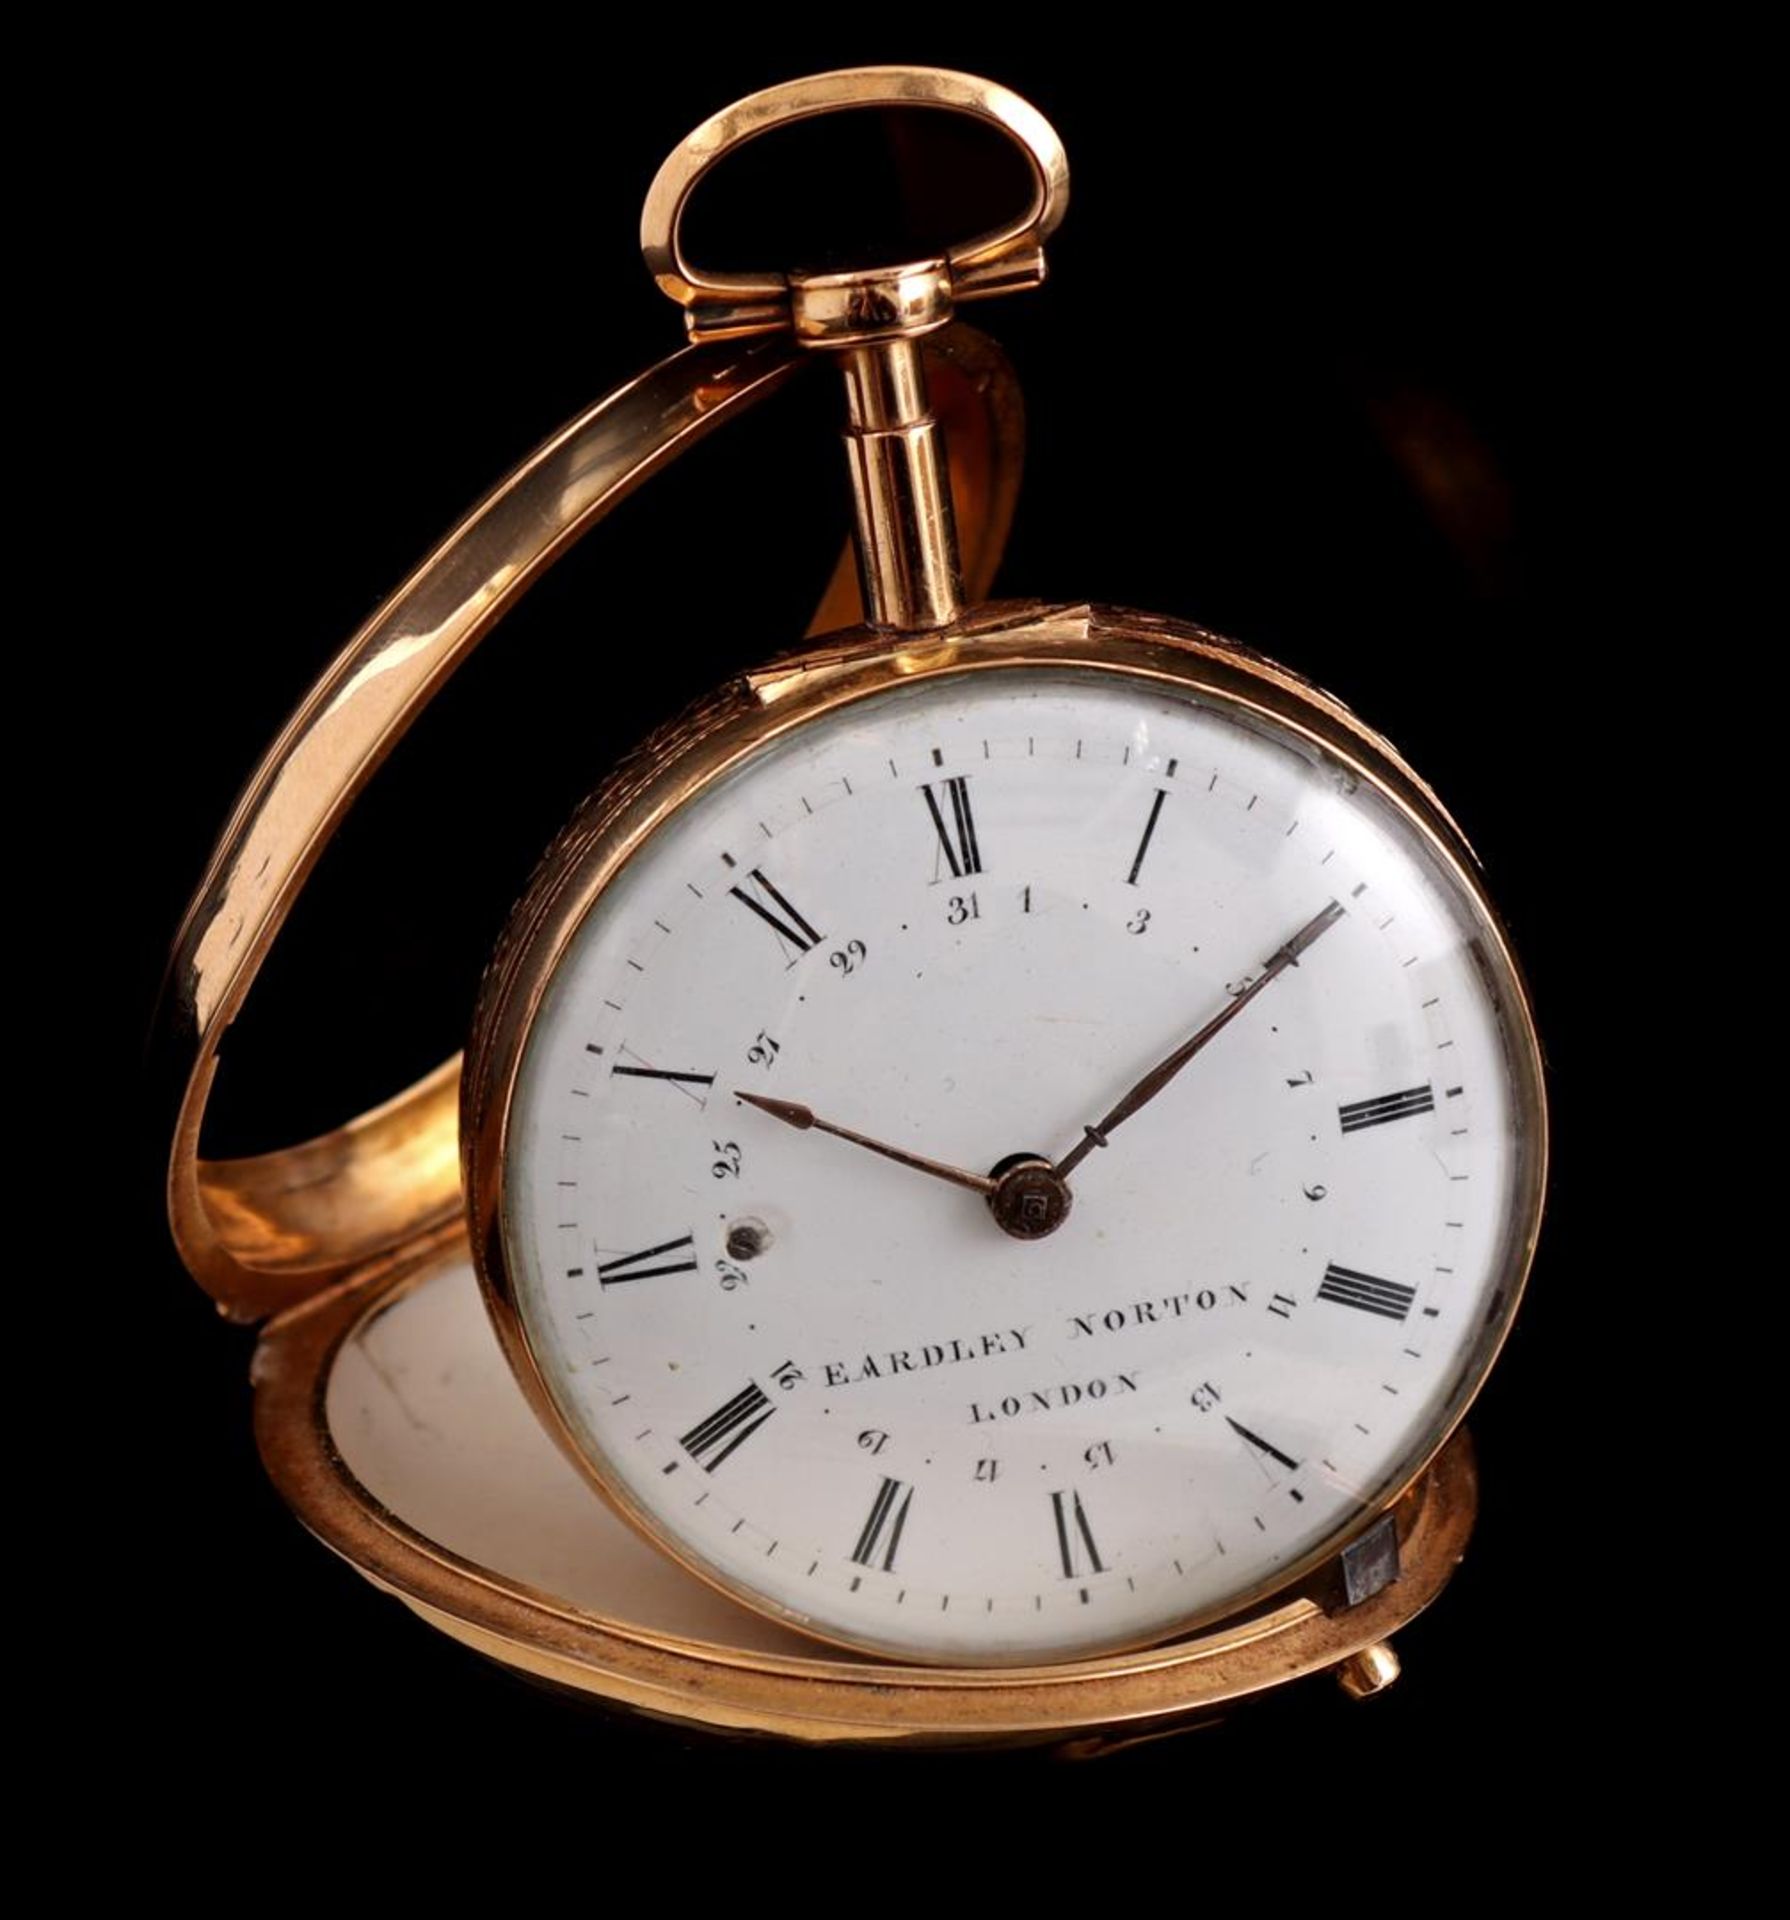 Eardley Norton London pocket watch - Image 3 of 5